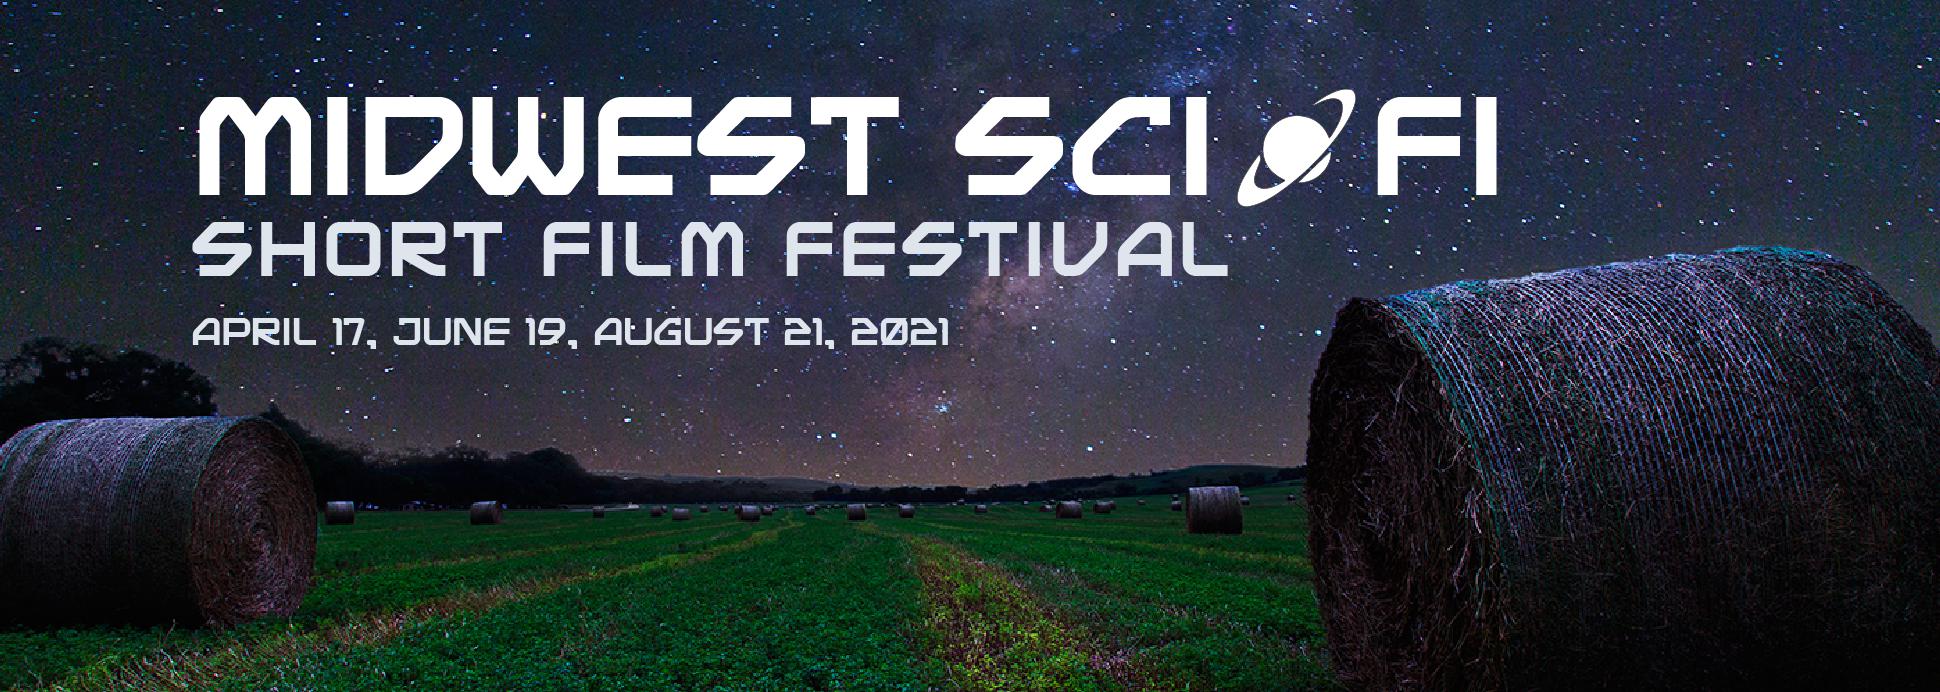 Midwest Sci-Fi Film Festival 2021